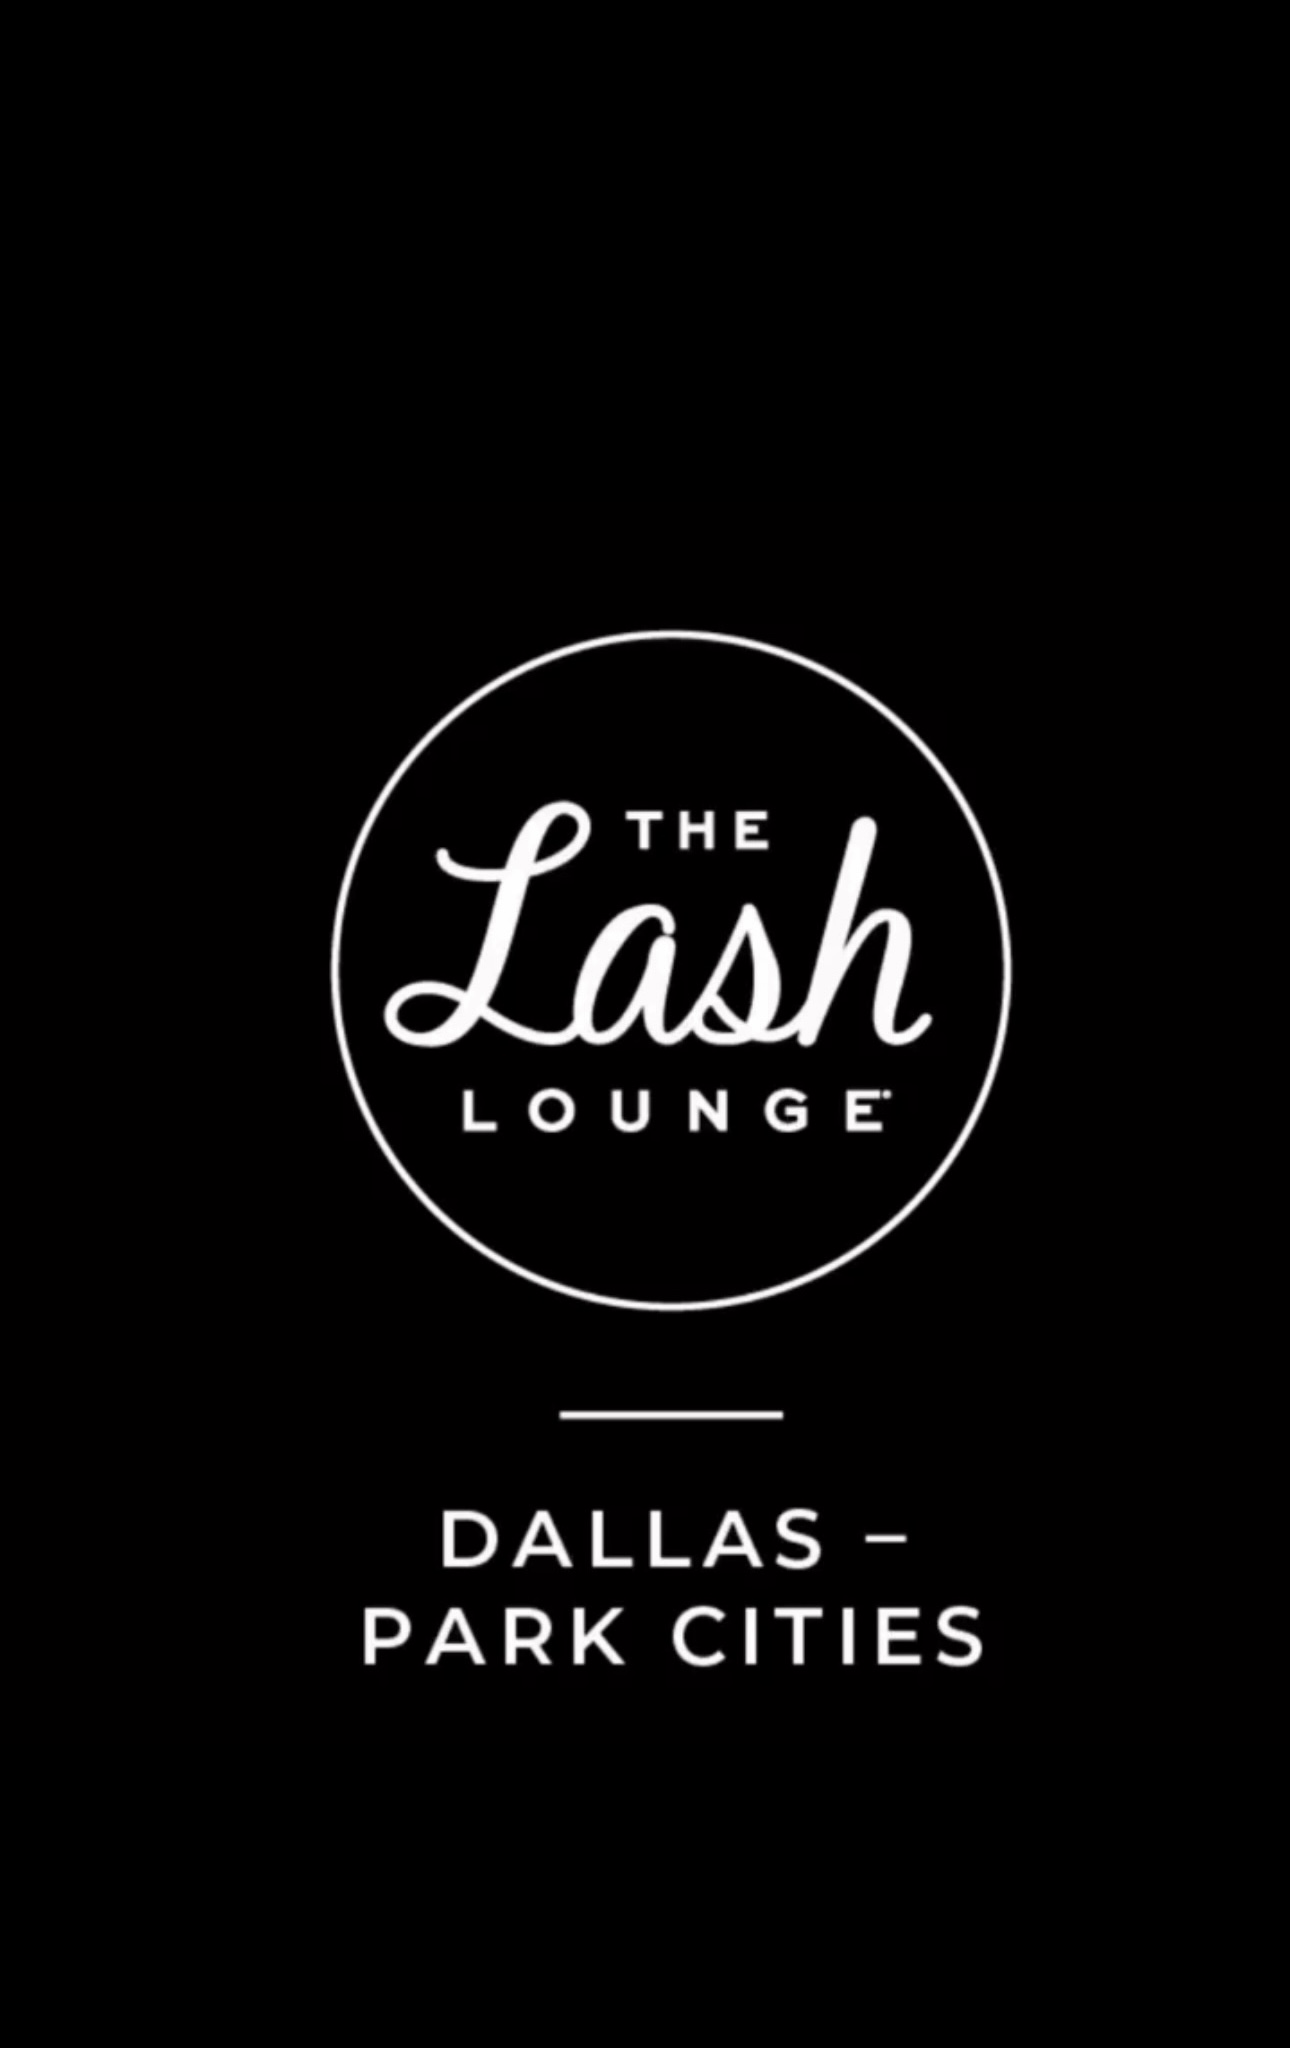 The Lash Lounge Dallas - Park Cities